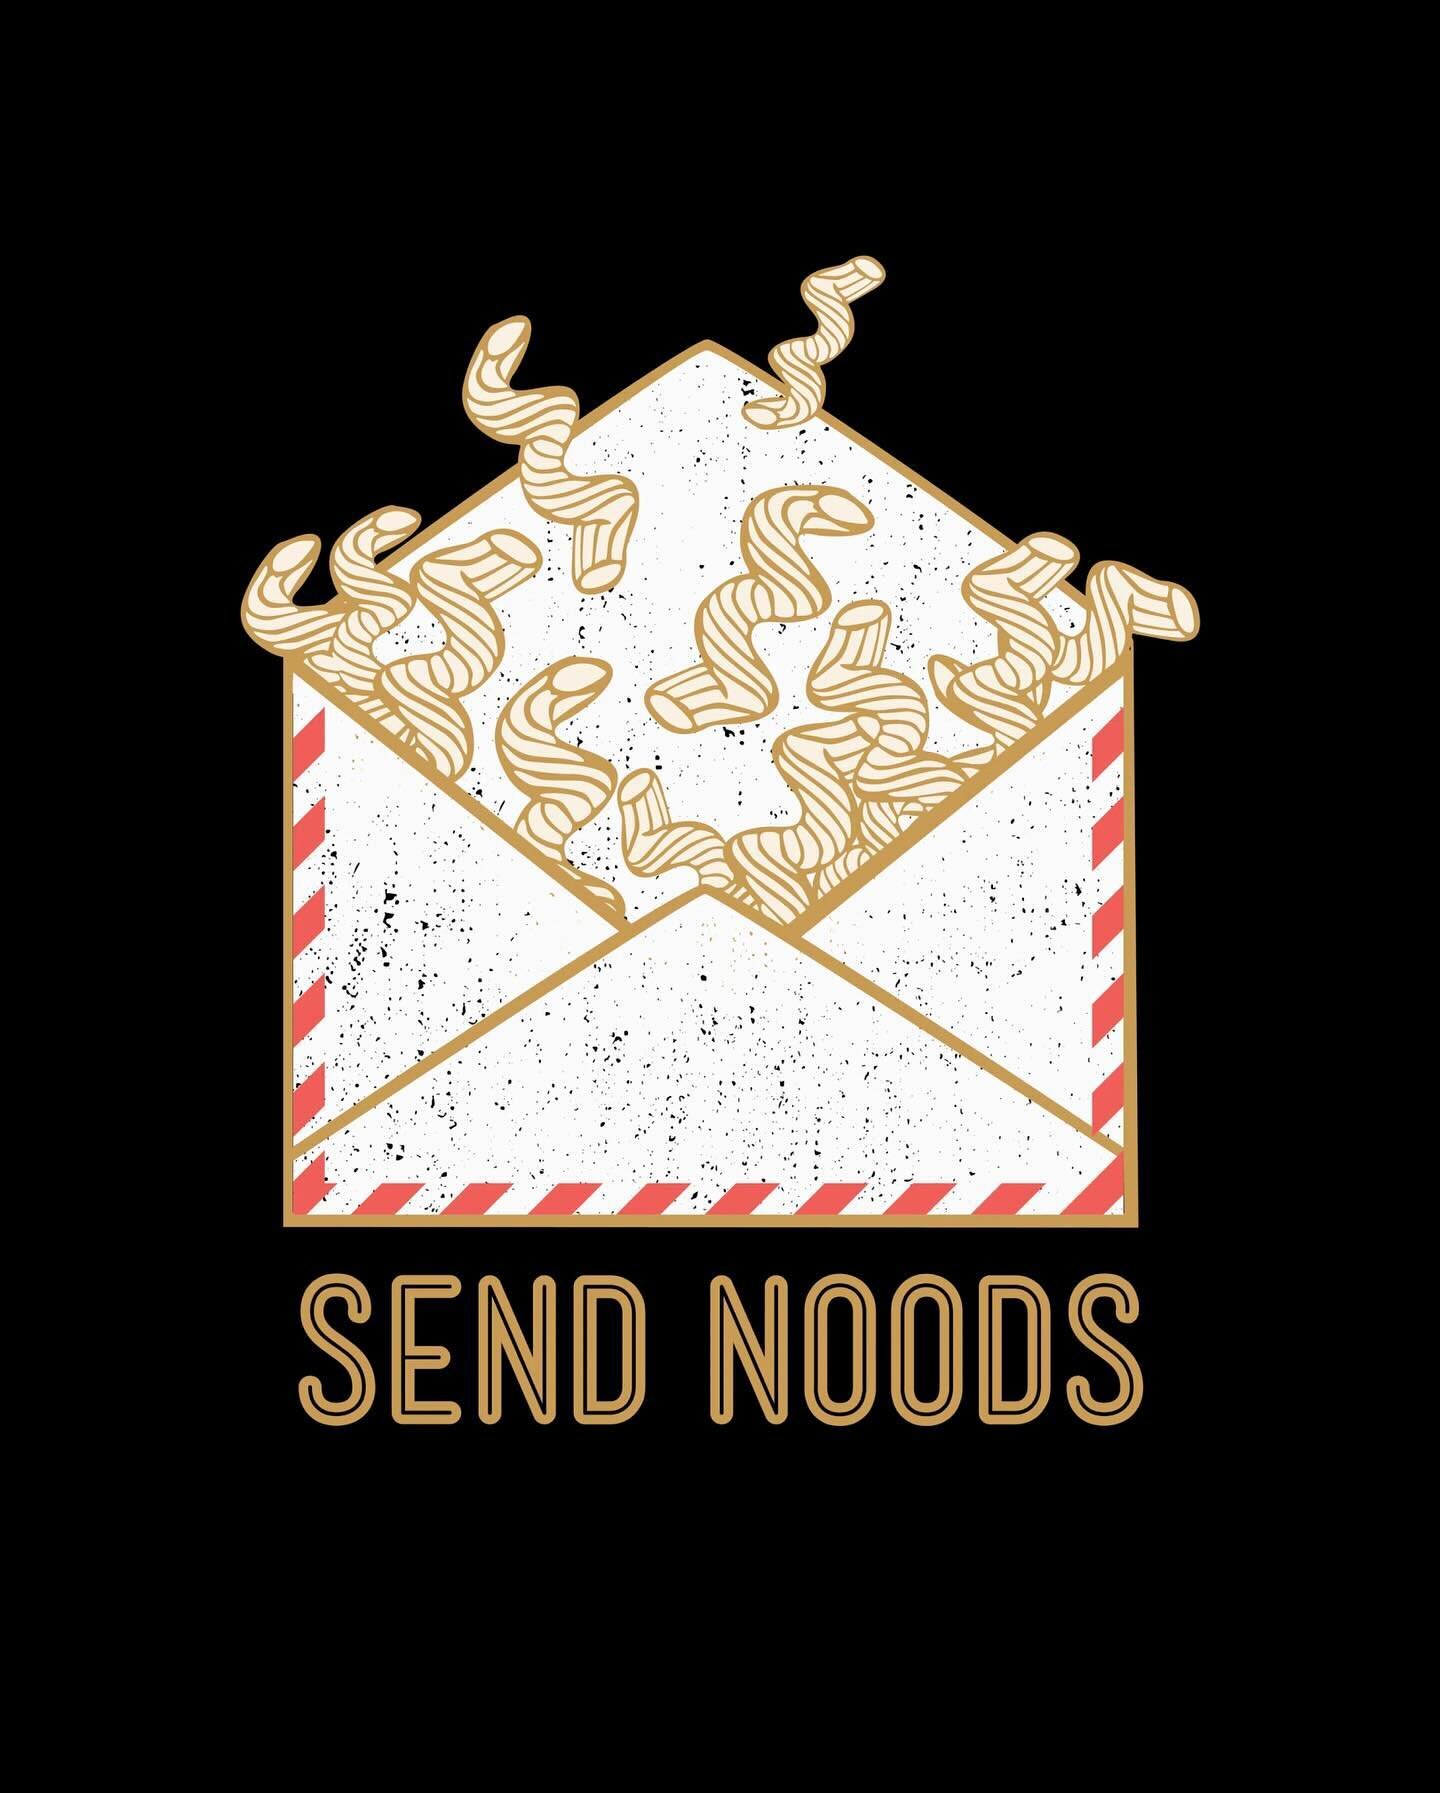 UNIT 69 SENDS NOODS LANE 
🍝 😍 

Available on @cottonbureau 
#letteringart #digitallettering #appareldesign #tshirtdesign #cottonbureau #puns #sendnoods